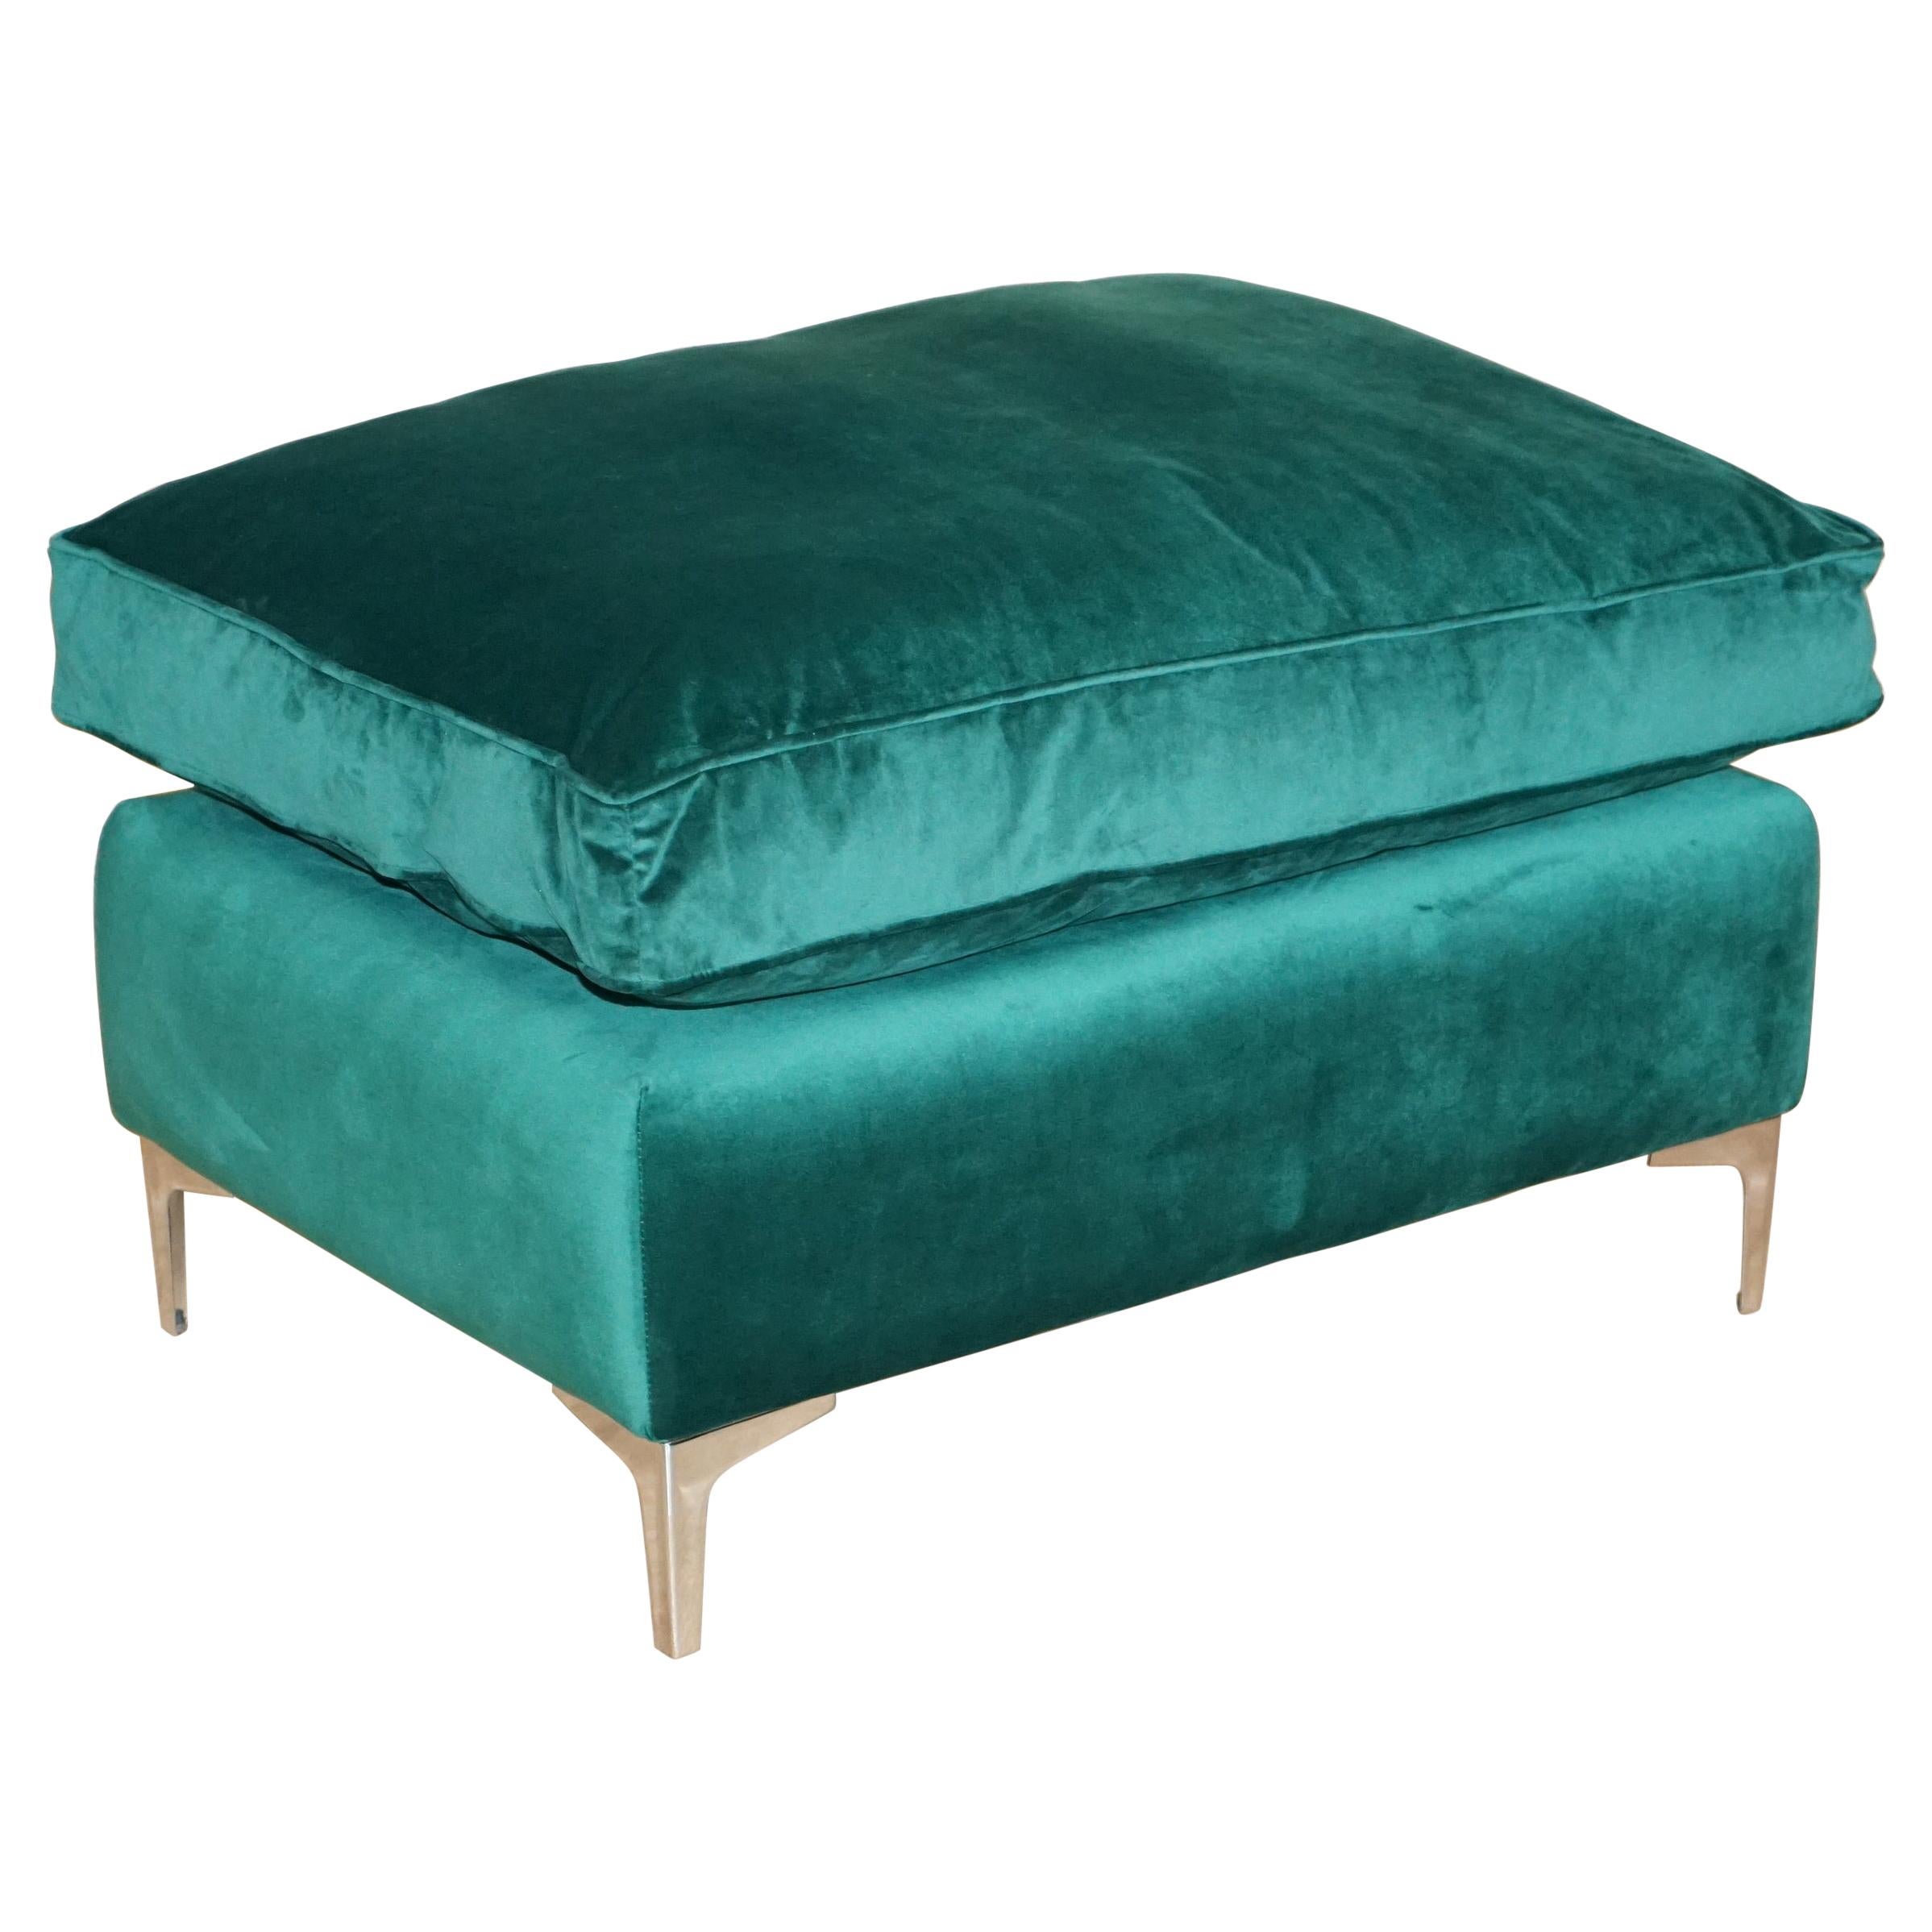 Stunning Ex Display Emerald Green Velvet Large Ottoman Footstool or Bench Seat